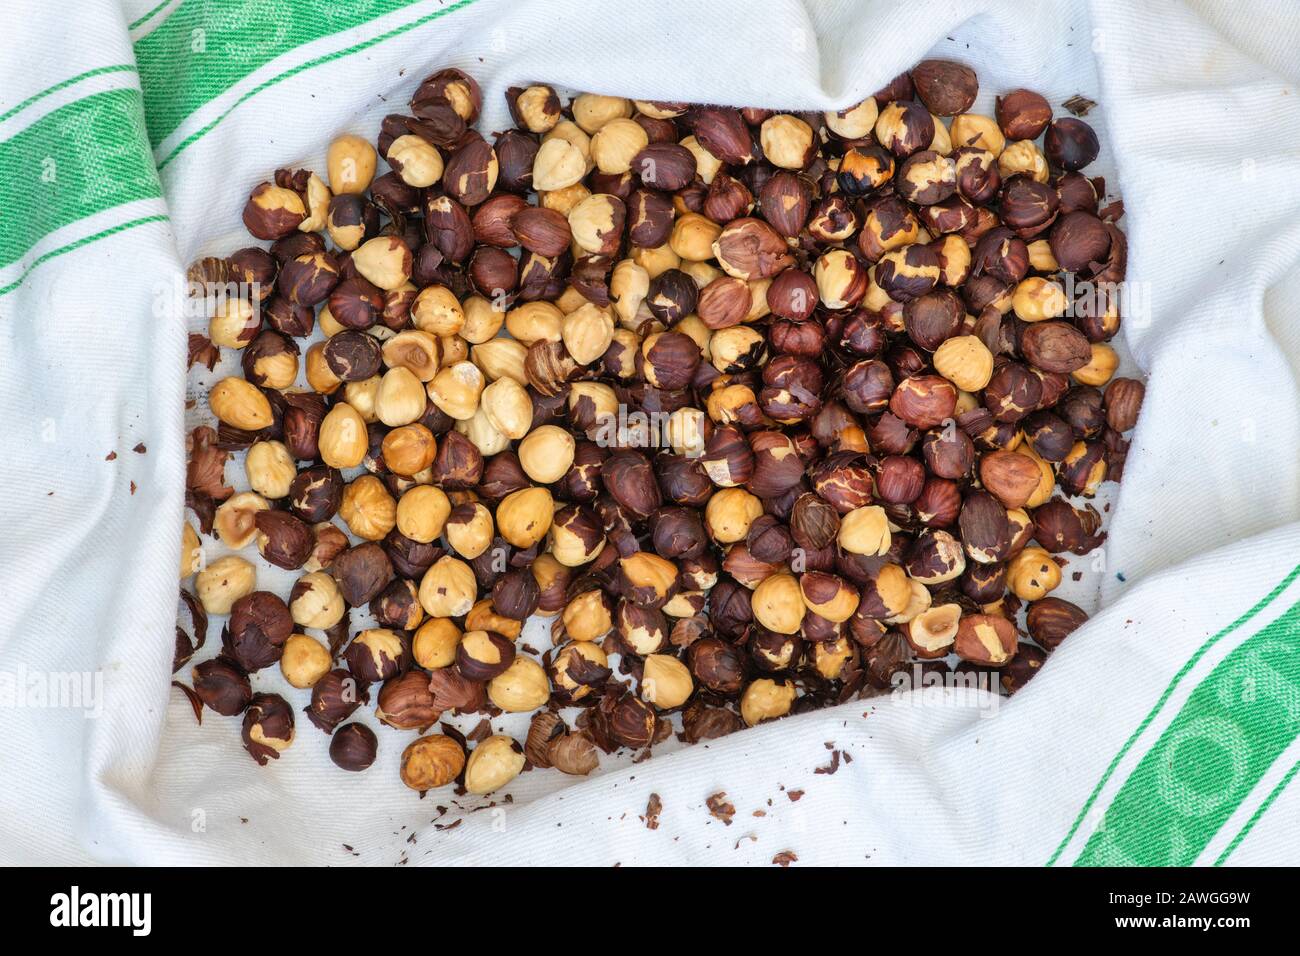 Corylus avellana. Roasted Hazelnuts on a towel for making homemade vegan hazelnut chocolate spread Stock Photo